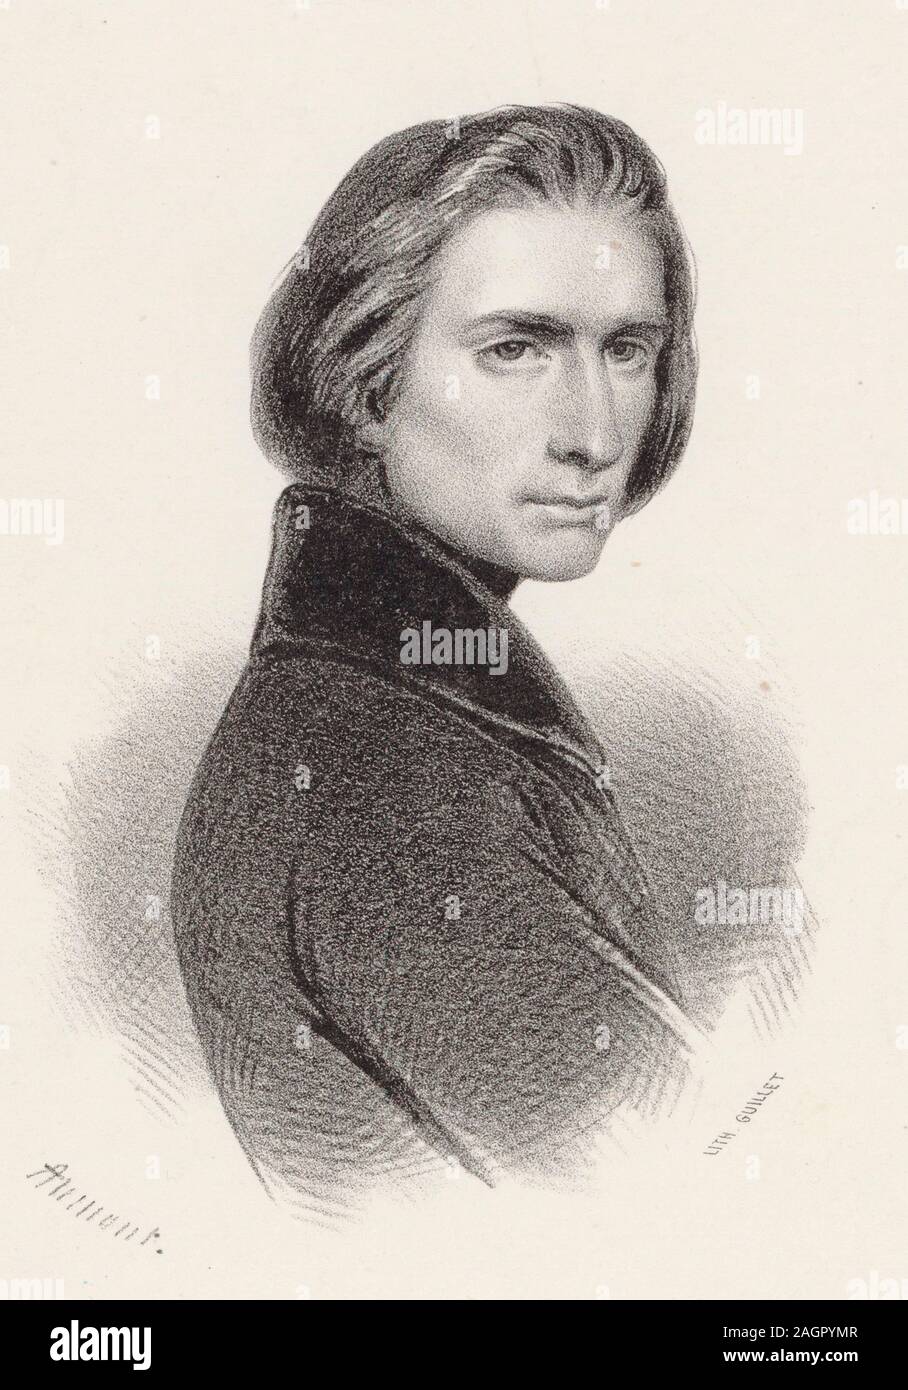 Portrait des Komponisten Franz Liszt (1811-1886). Museum: private Sammlung. Autor: pierre-hippolyte Aumont. Stockfoto